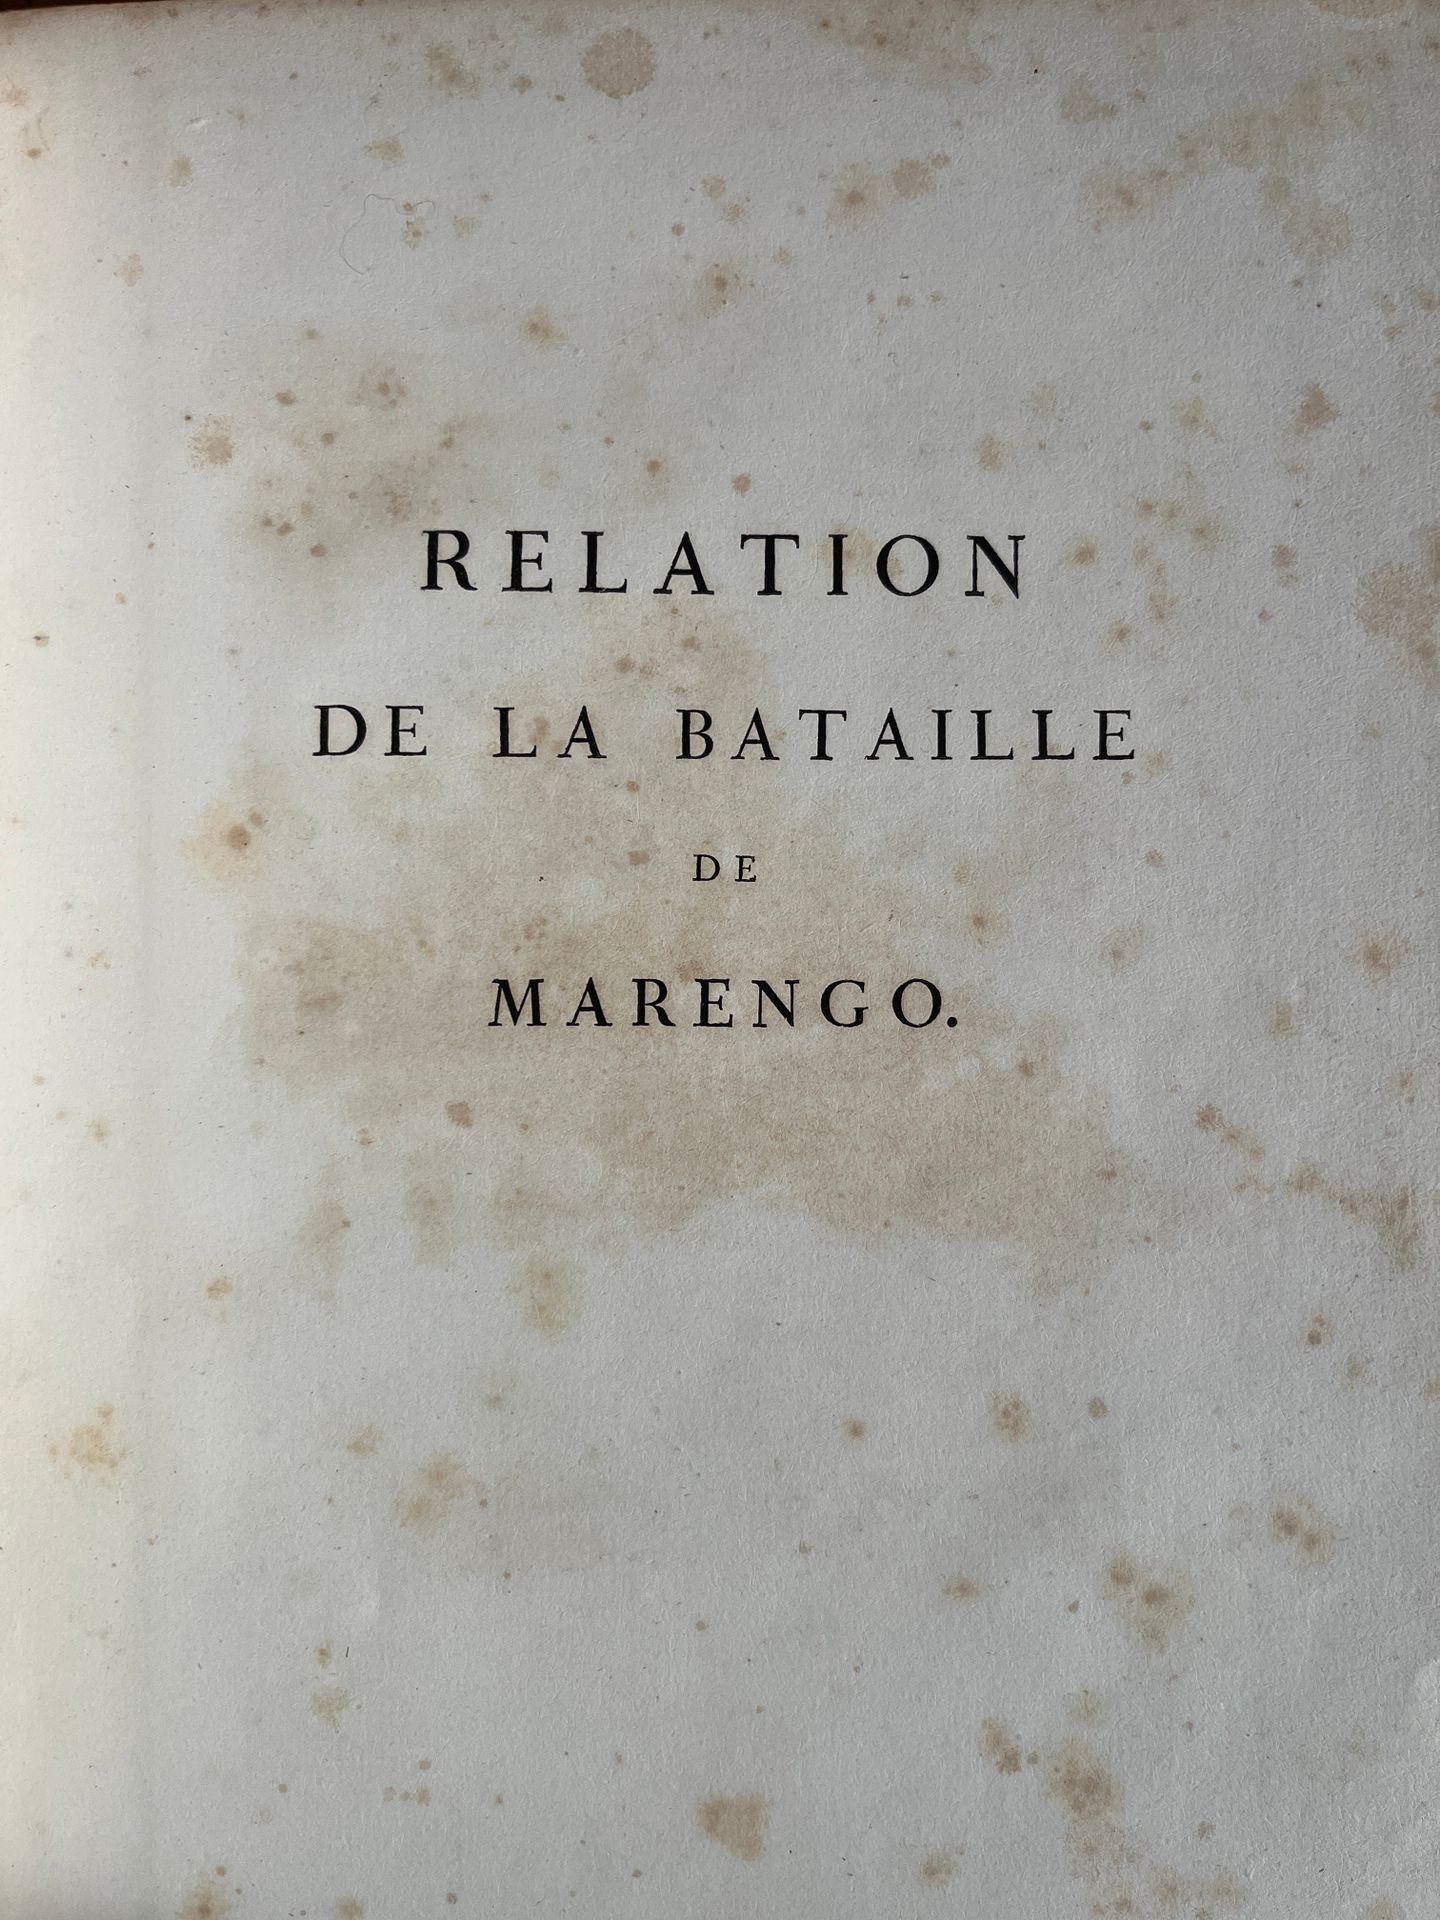 Null [战役]
马伦戈之战的关系。巴黎，亚历克斯-贝尔蒂埃1806年著。
4开本，全绿色小牛皮，花边上镶有皇帝的手臂，两张折叠式地图
与婚姻有关的仪式的联合&hellip;